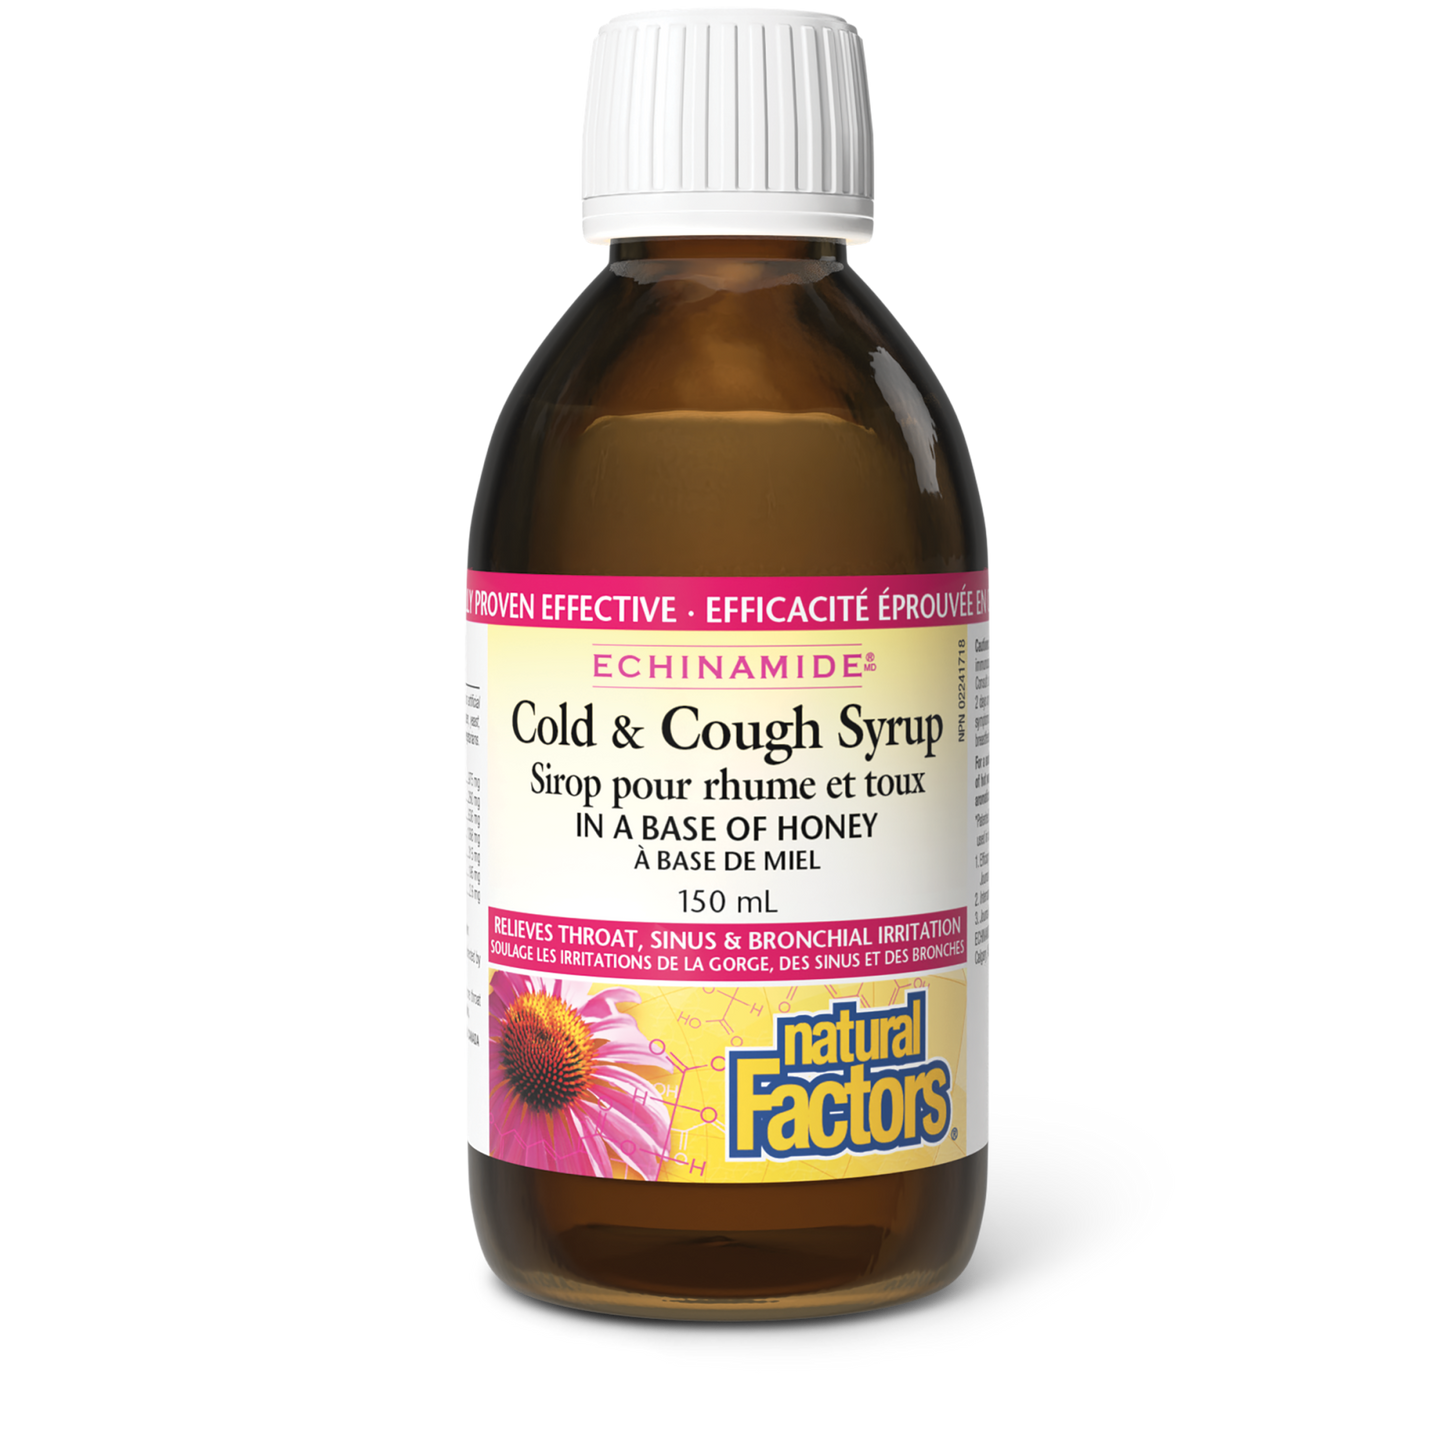 Cold & Cough Syrup, ECHINAMIDE, Natural Factors|v|image|4760